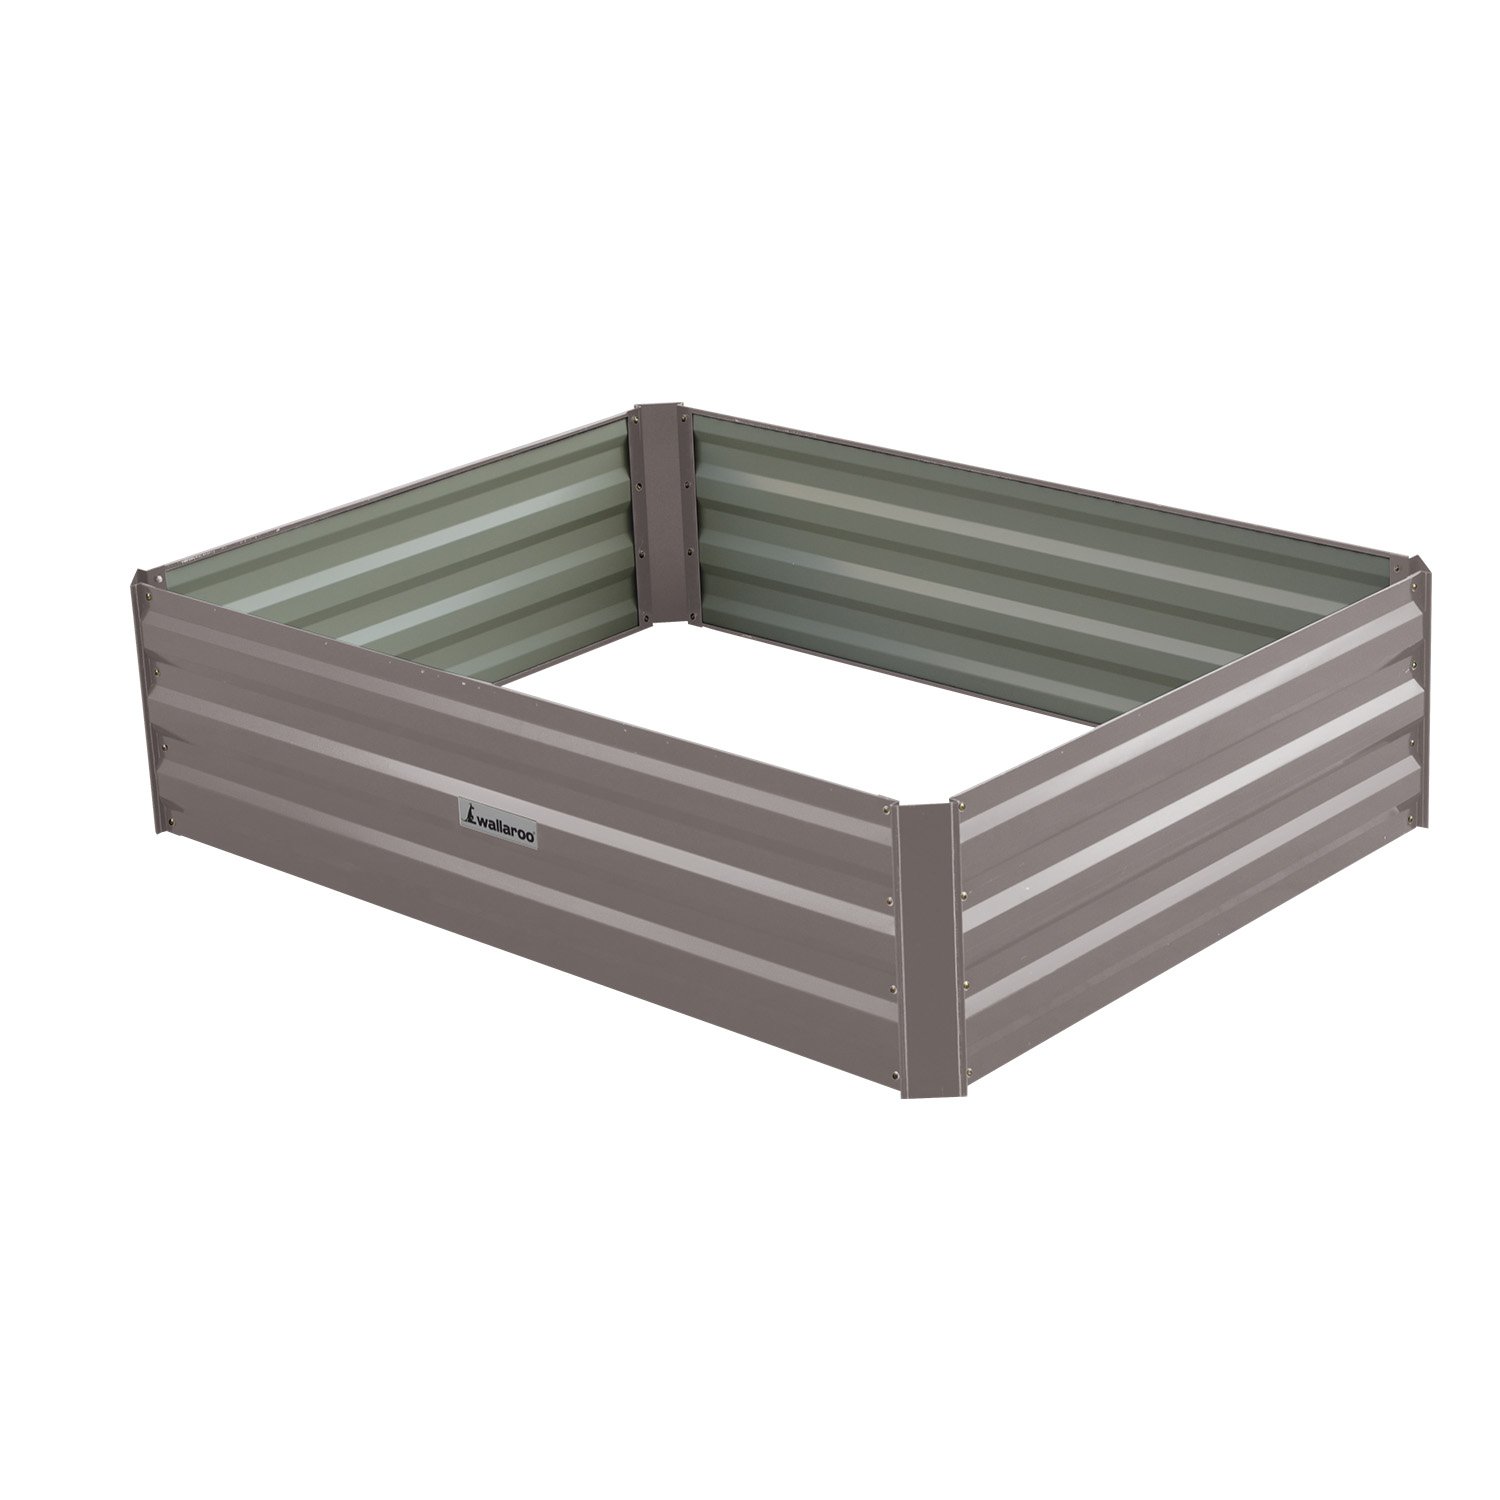 Wallaroo Garden Bed 120 x 90 x 30cm Galvanized Steel - Grey 2